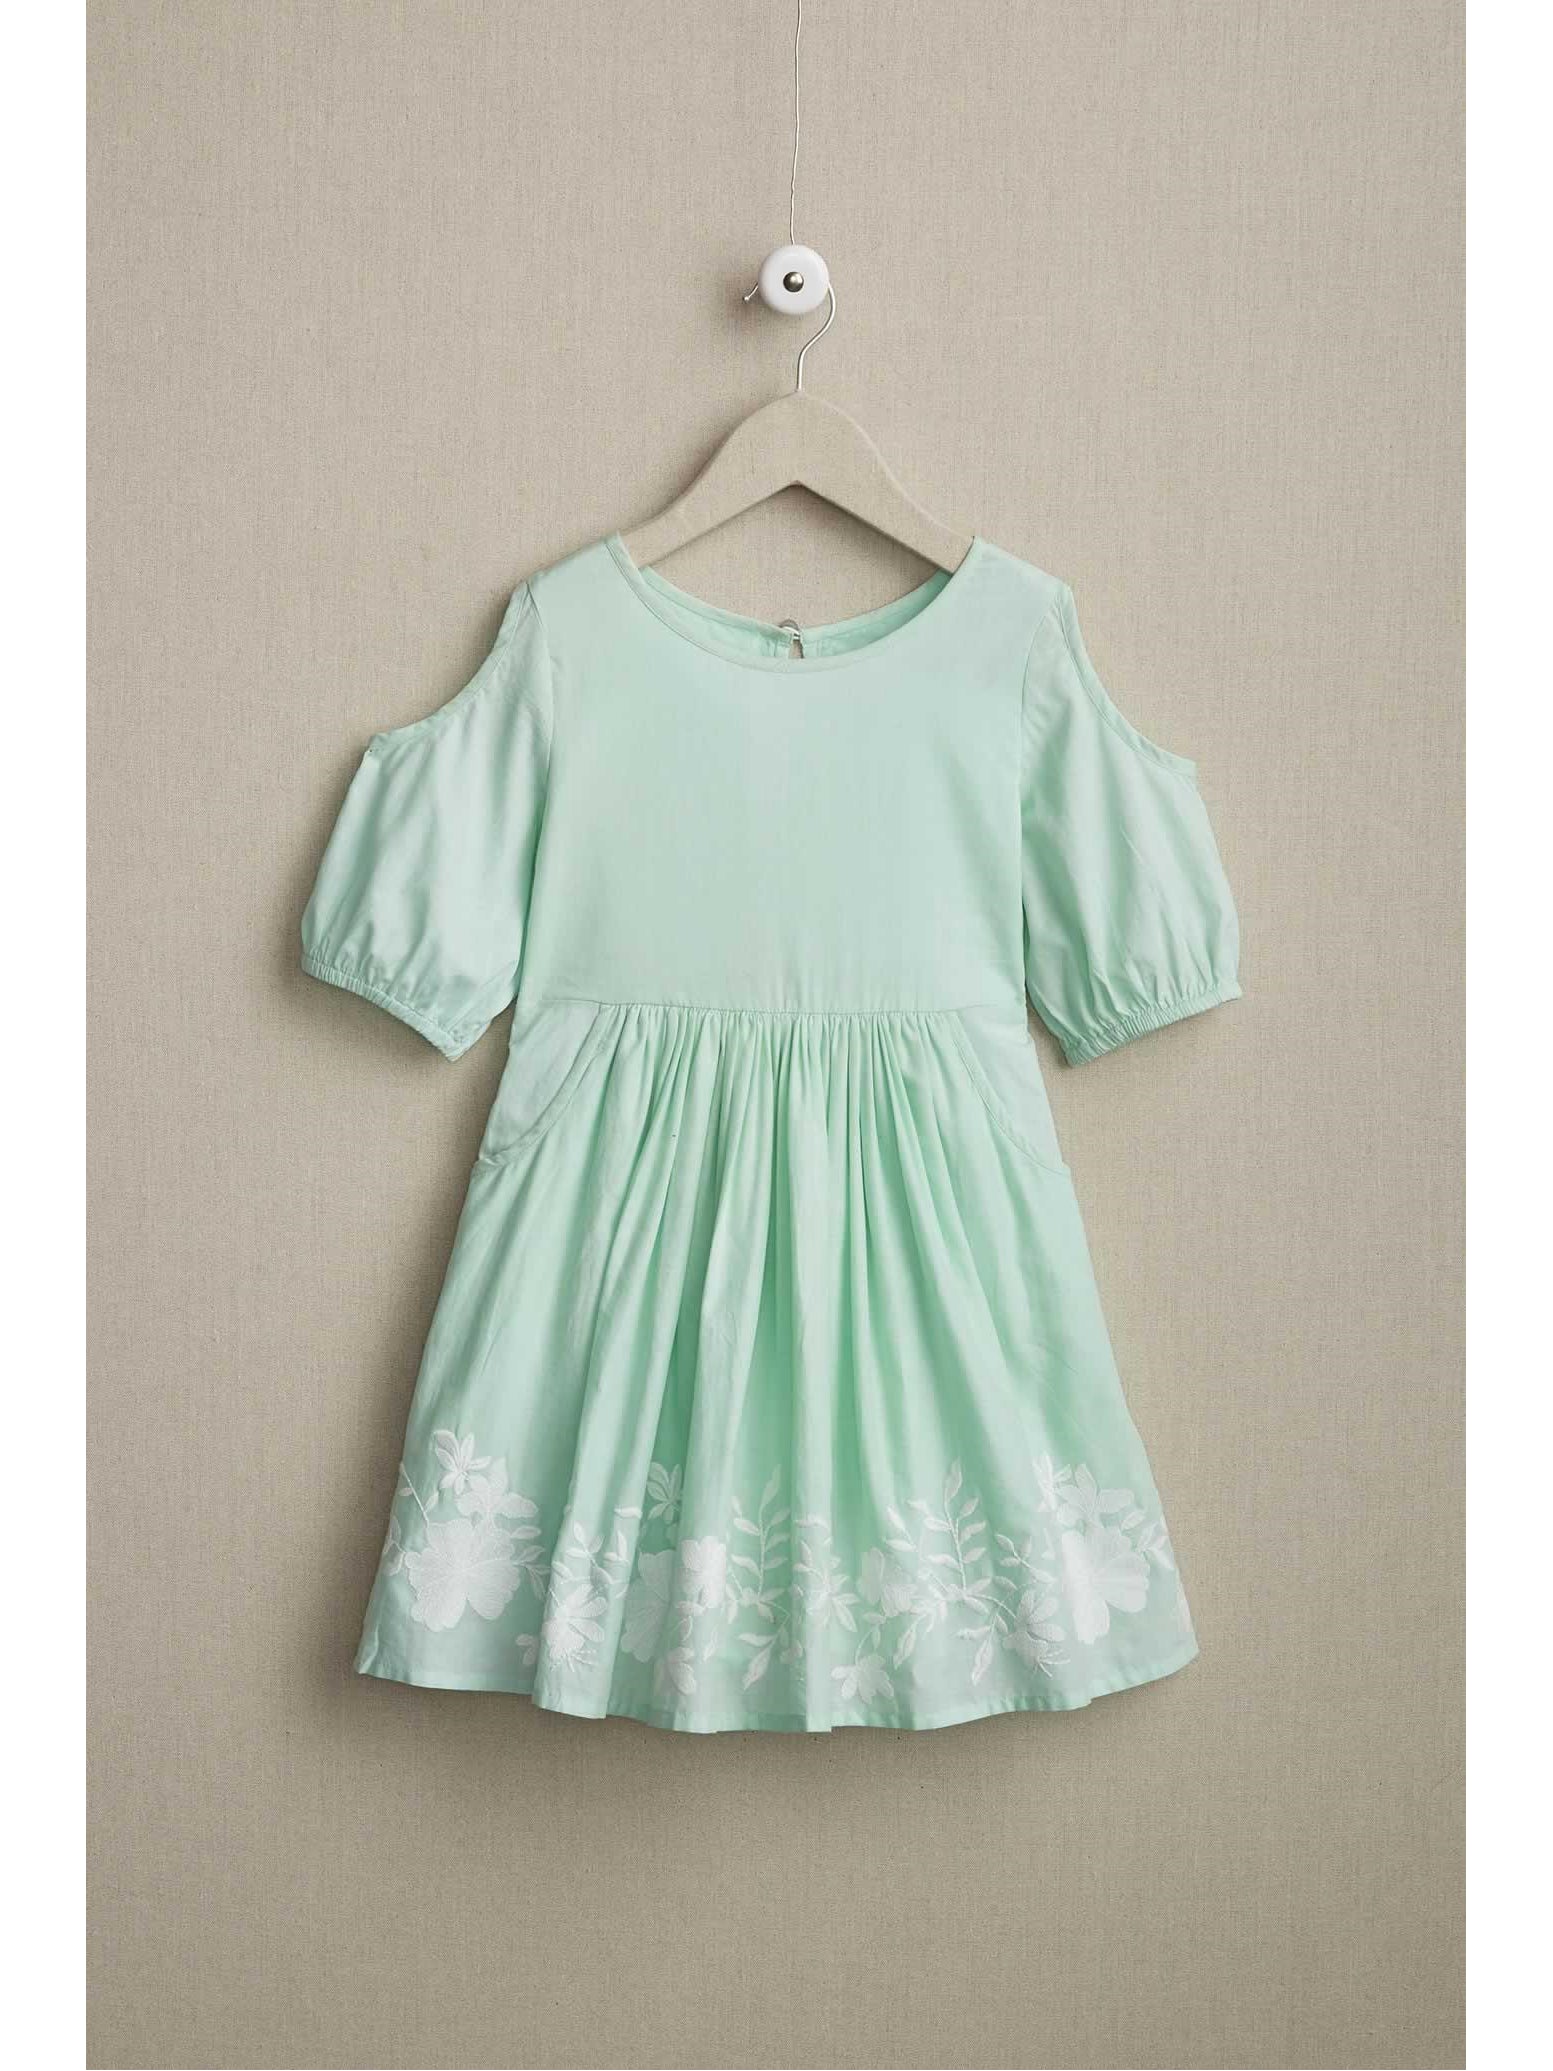 hopscotch dresses for baby girl